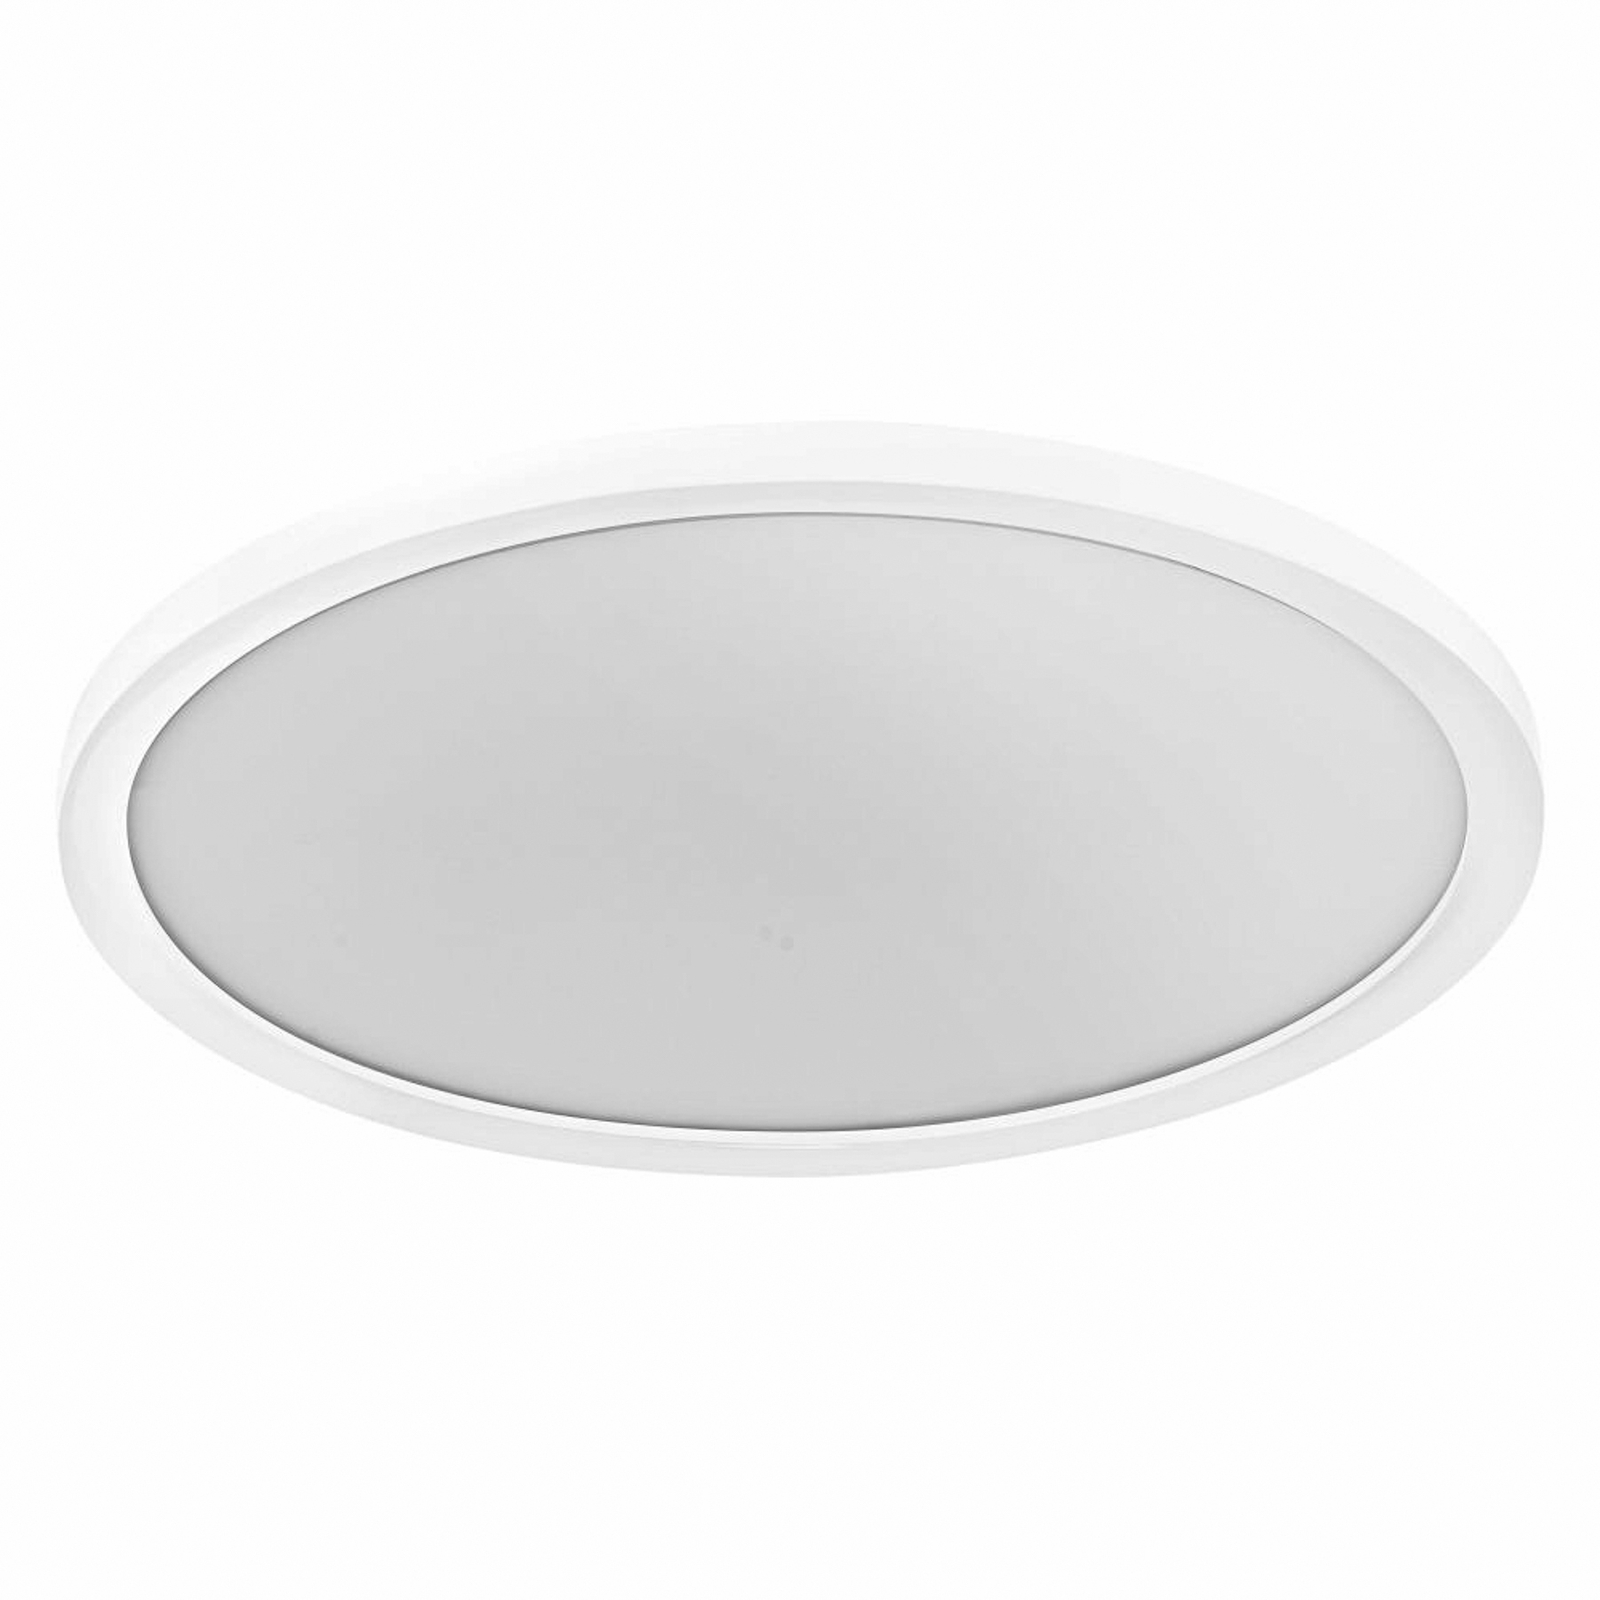 LEDVANCE SMART+ WiFi Orbis Disc, hvit, Ø 40 cm